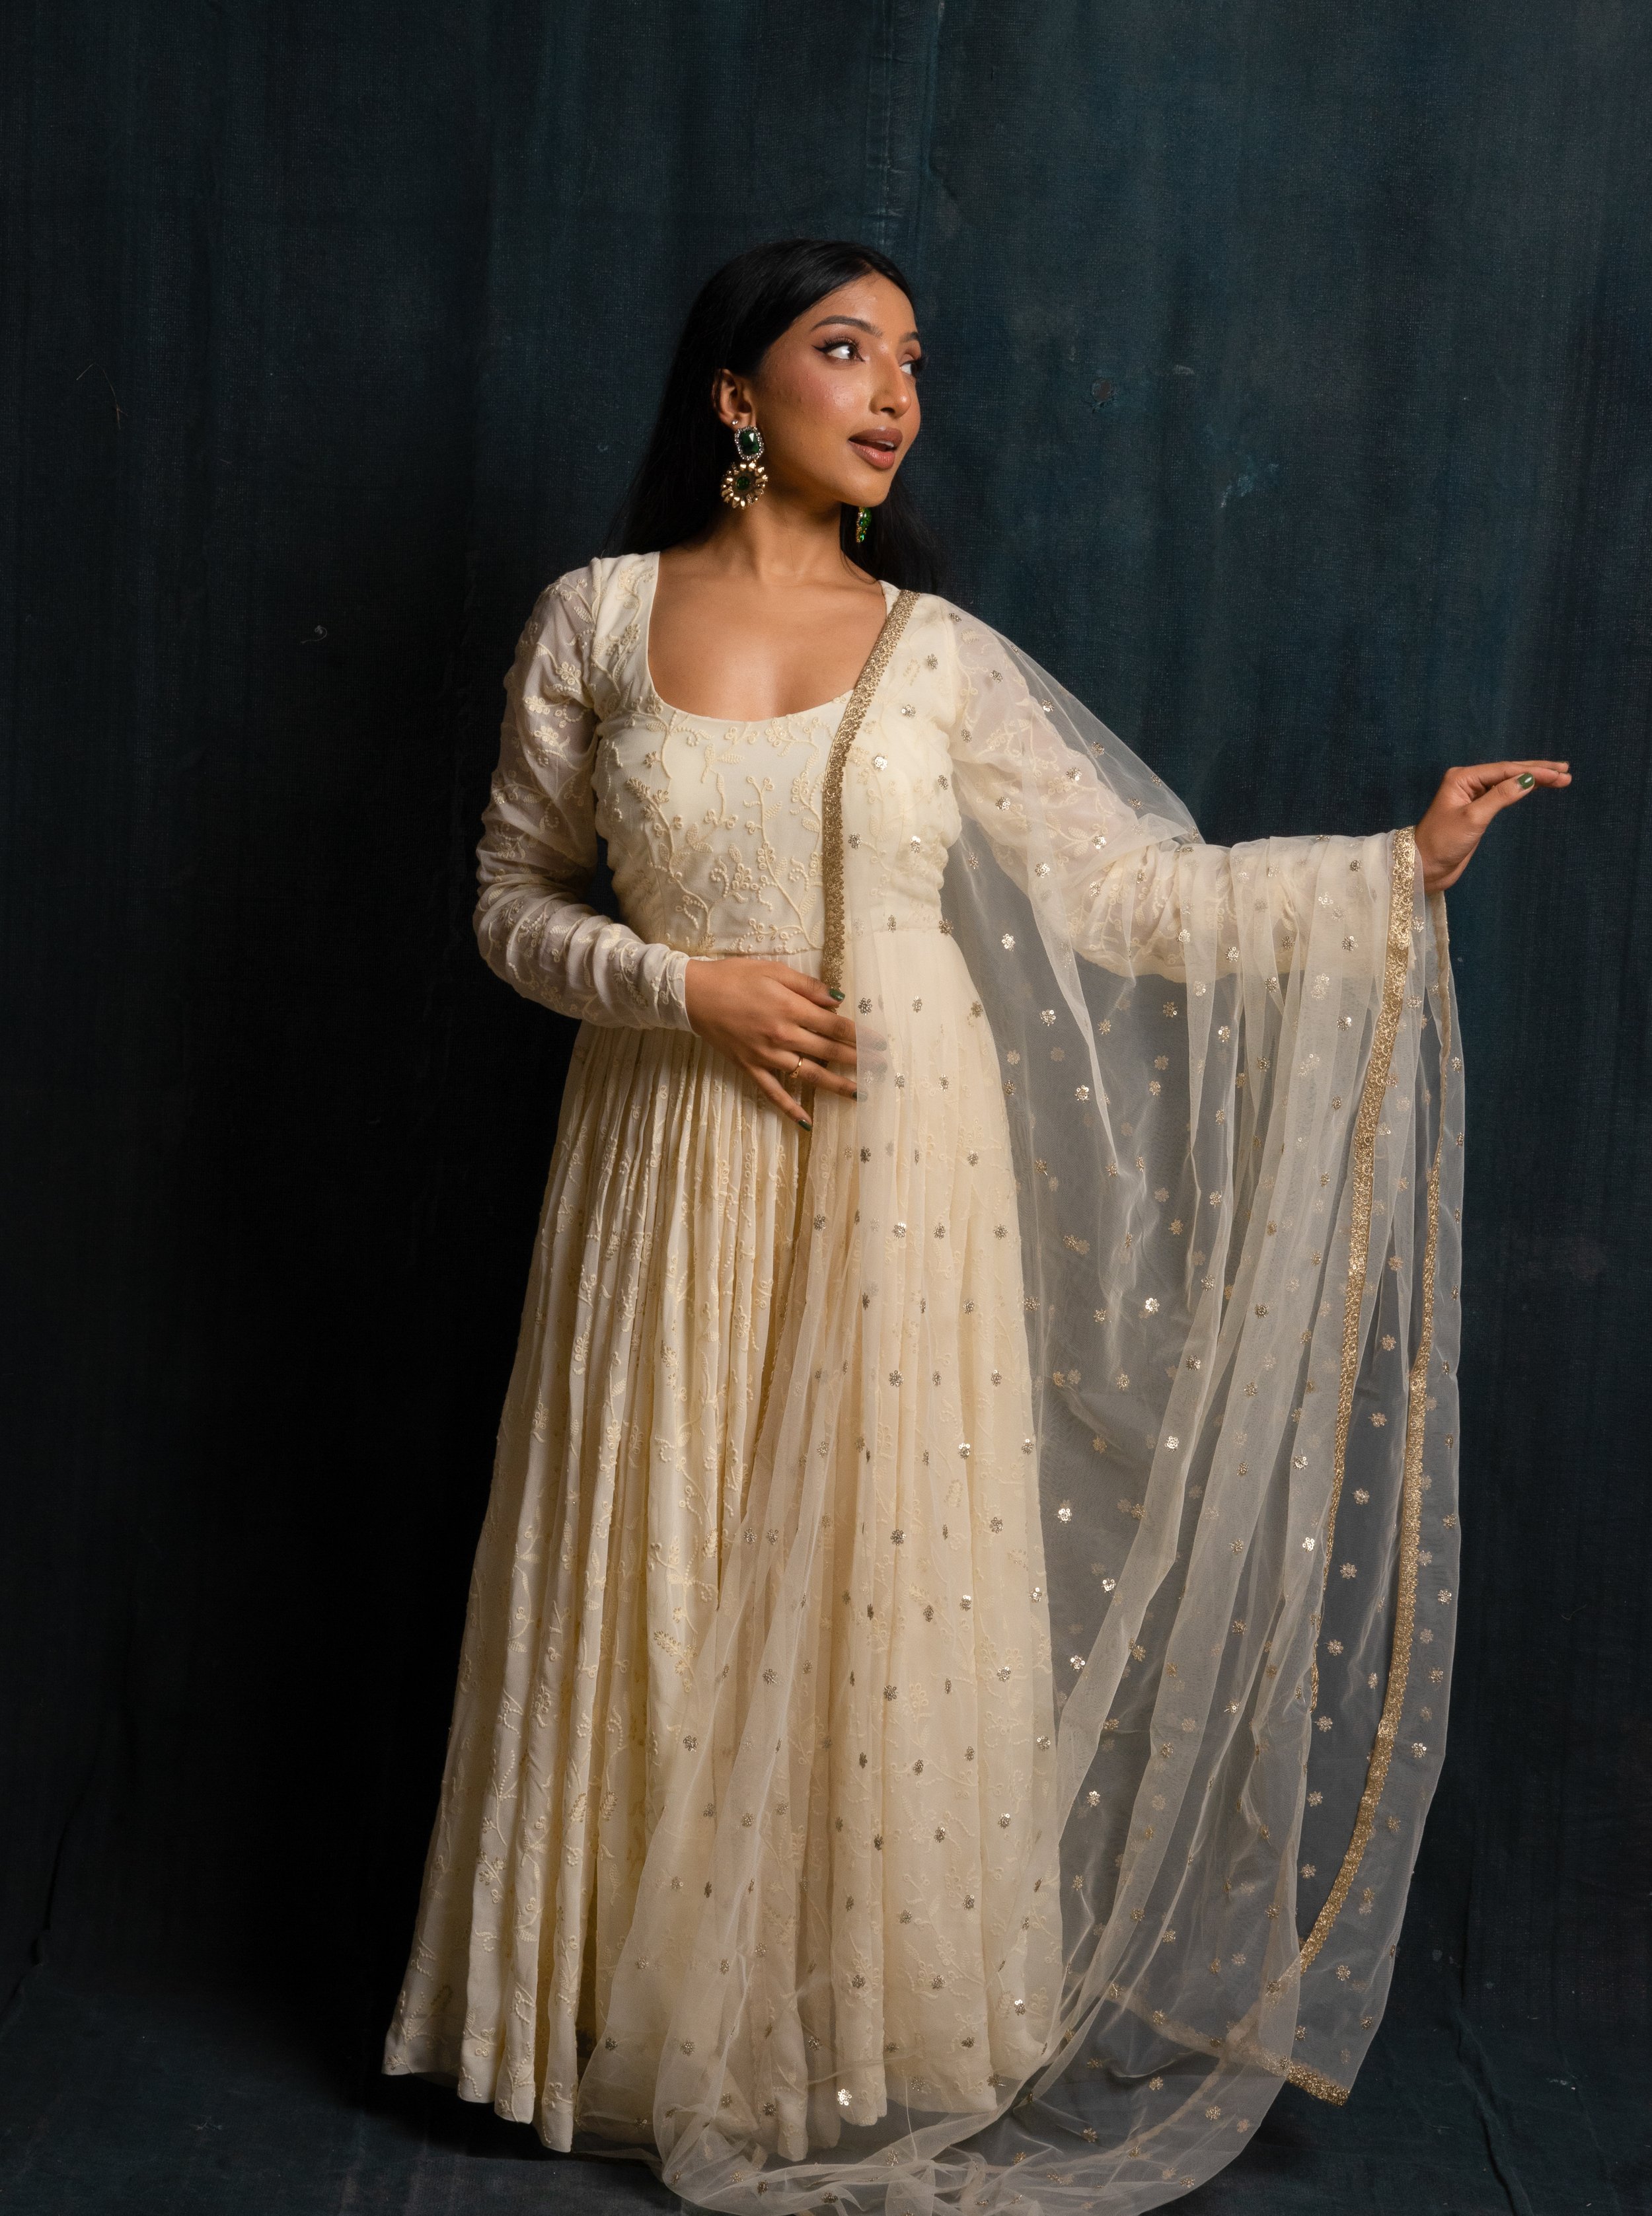 White Anarkali Suits - Latest White Anarkali Dress Online